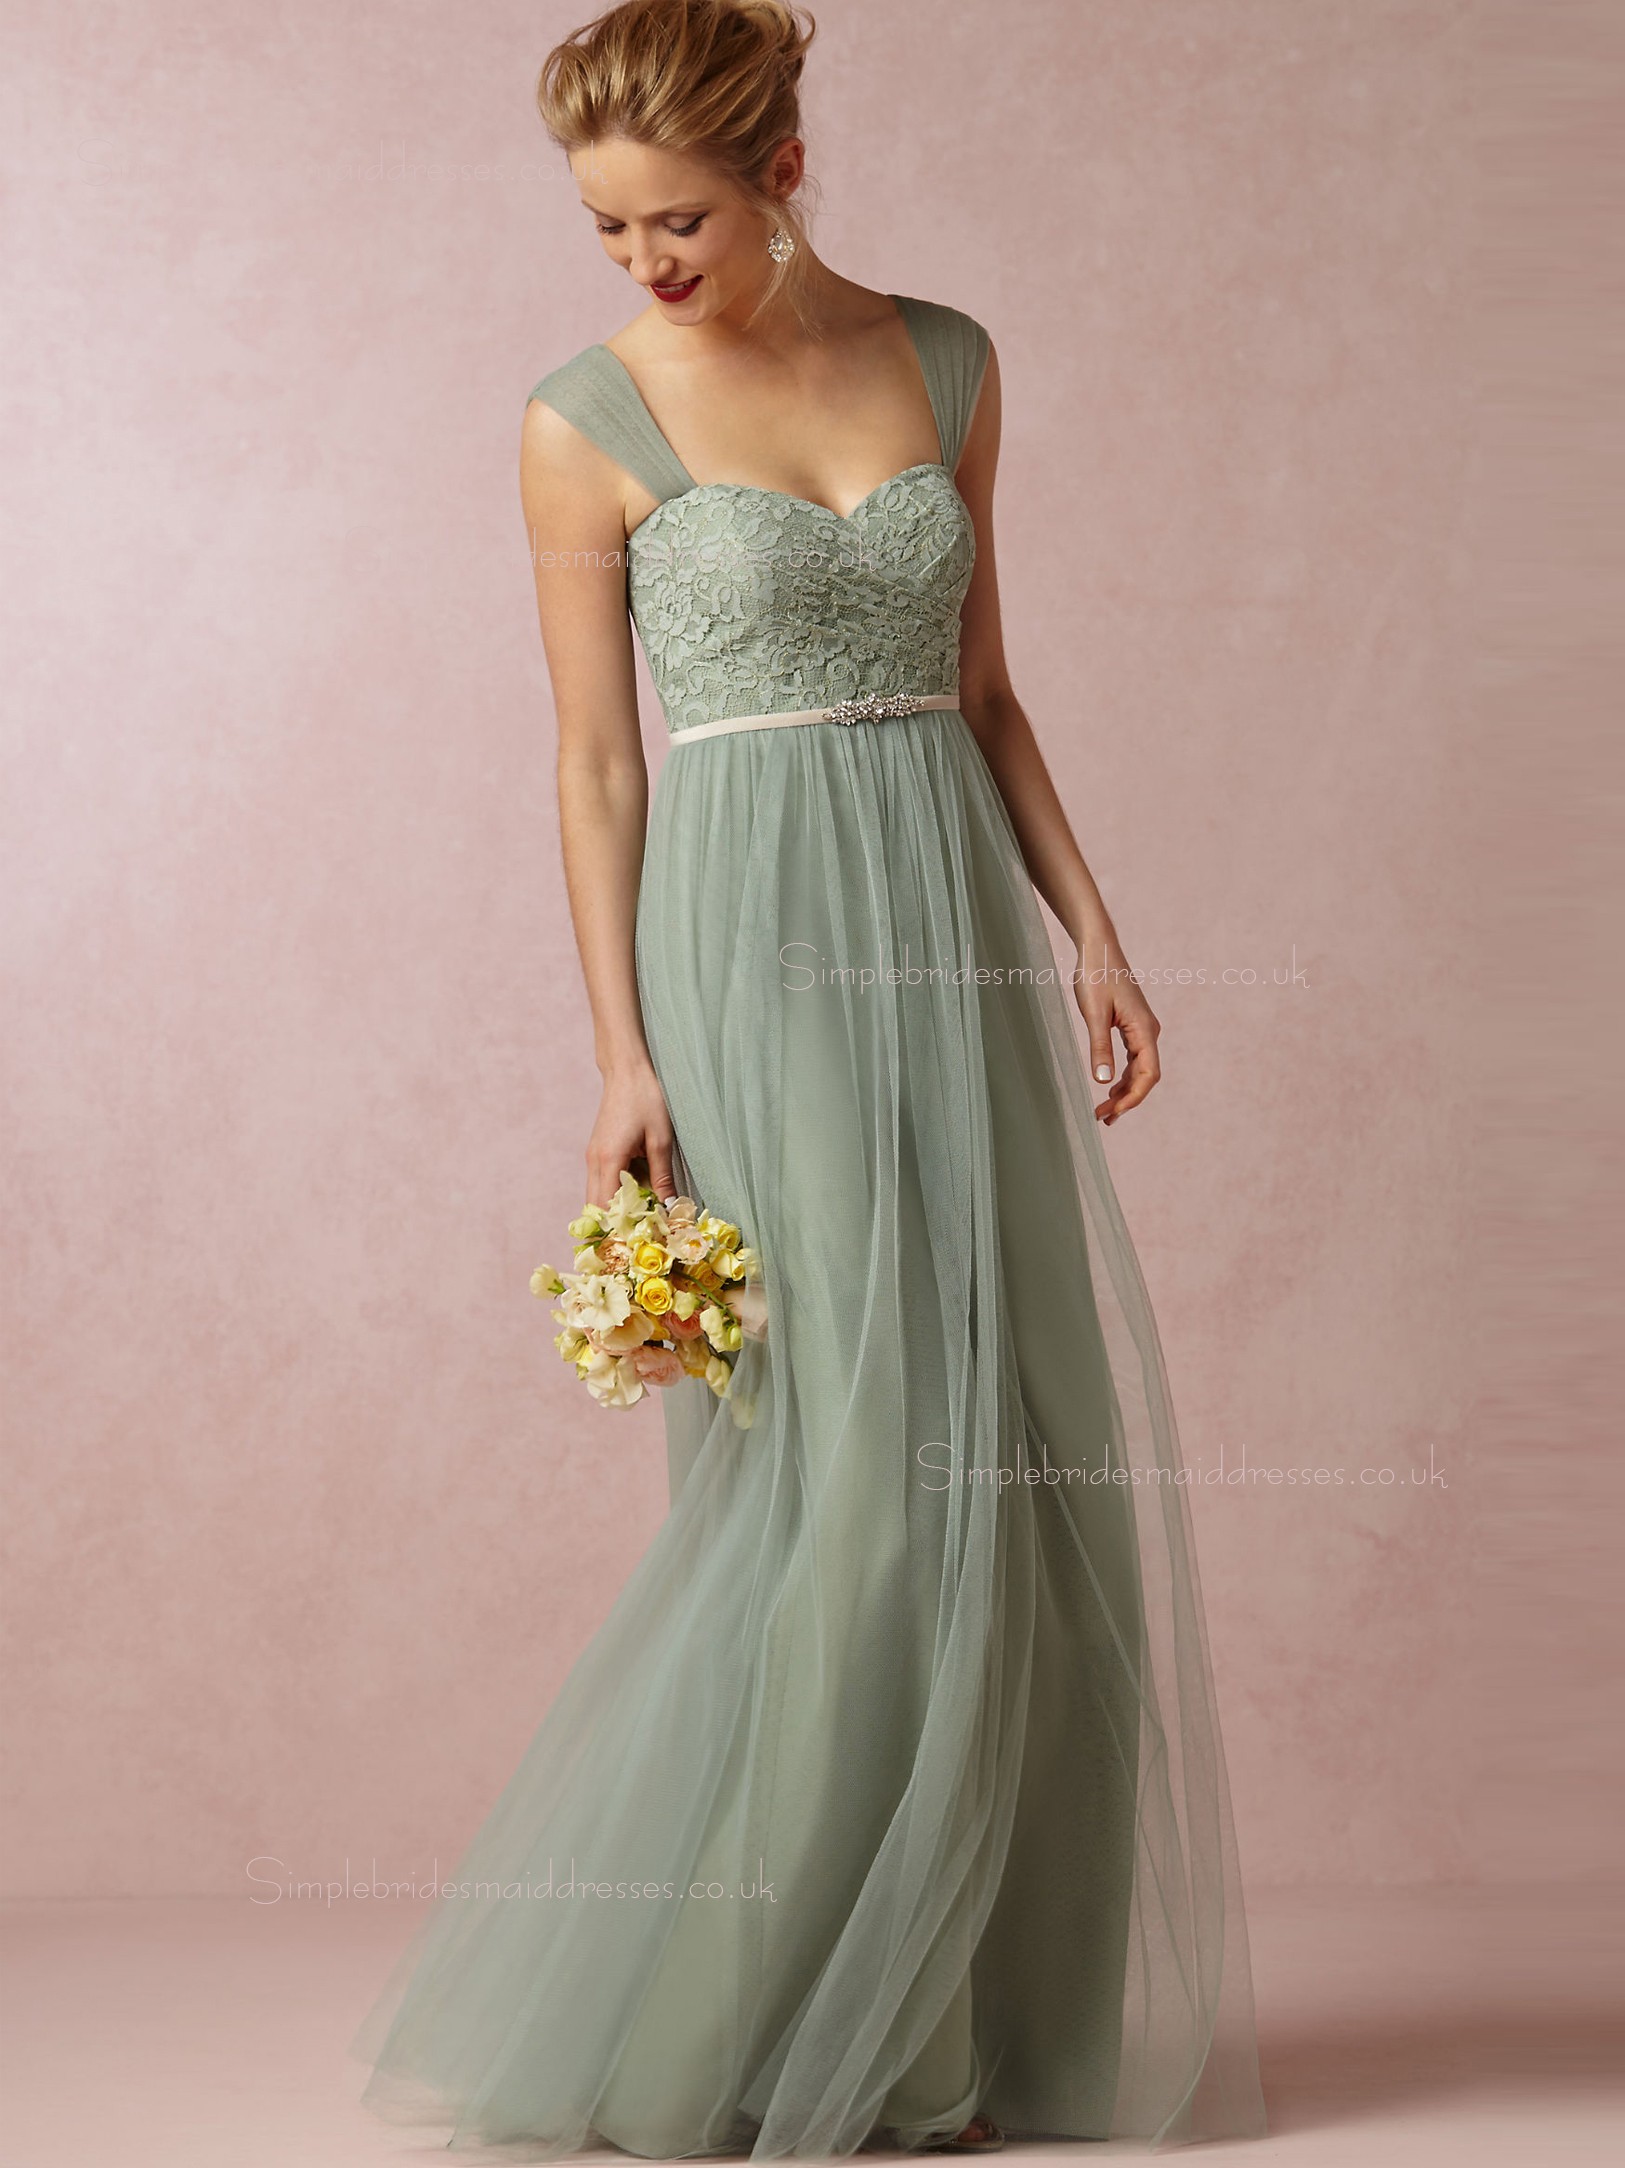 Shop Custom Green Floor Length A Line Bridesmaid Dresses For 89 9